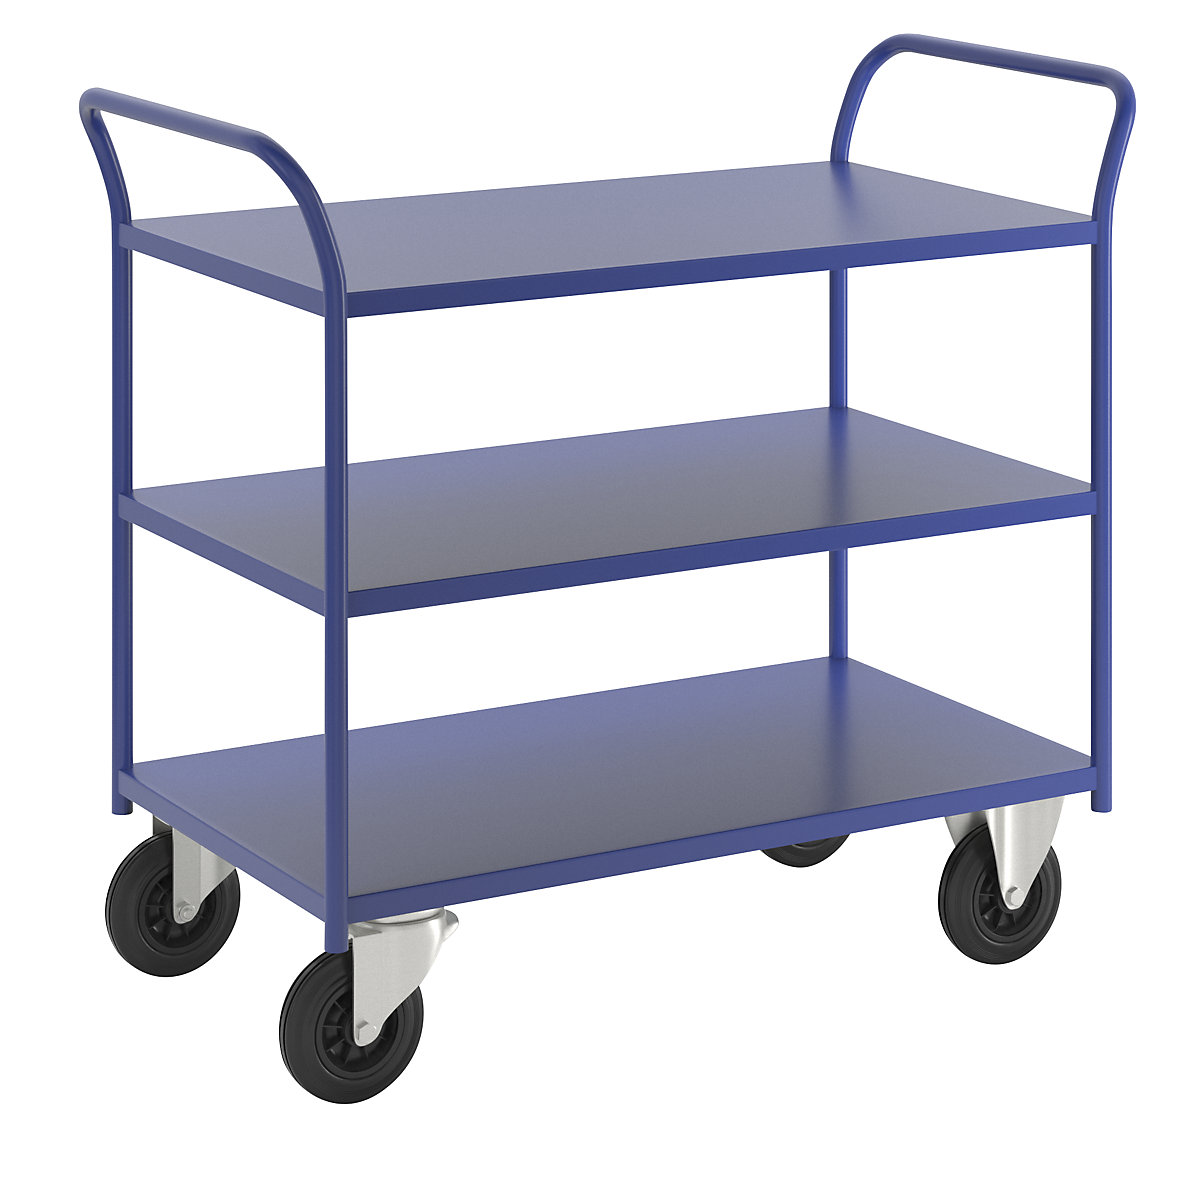 KM41 table trolley – Kongamek, 3 shelves, LxWxH 1070 x 550 x 975 mm, blue, 2 swivel castors and 2 fixed castors-9